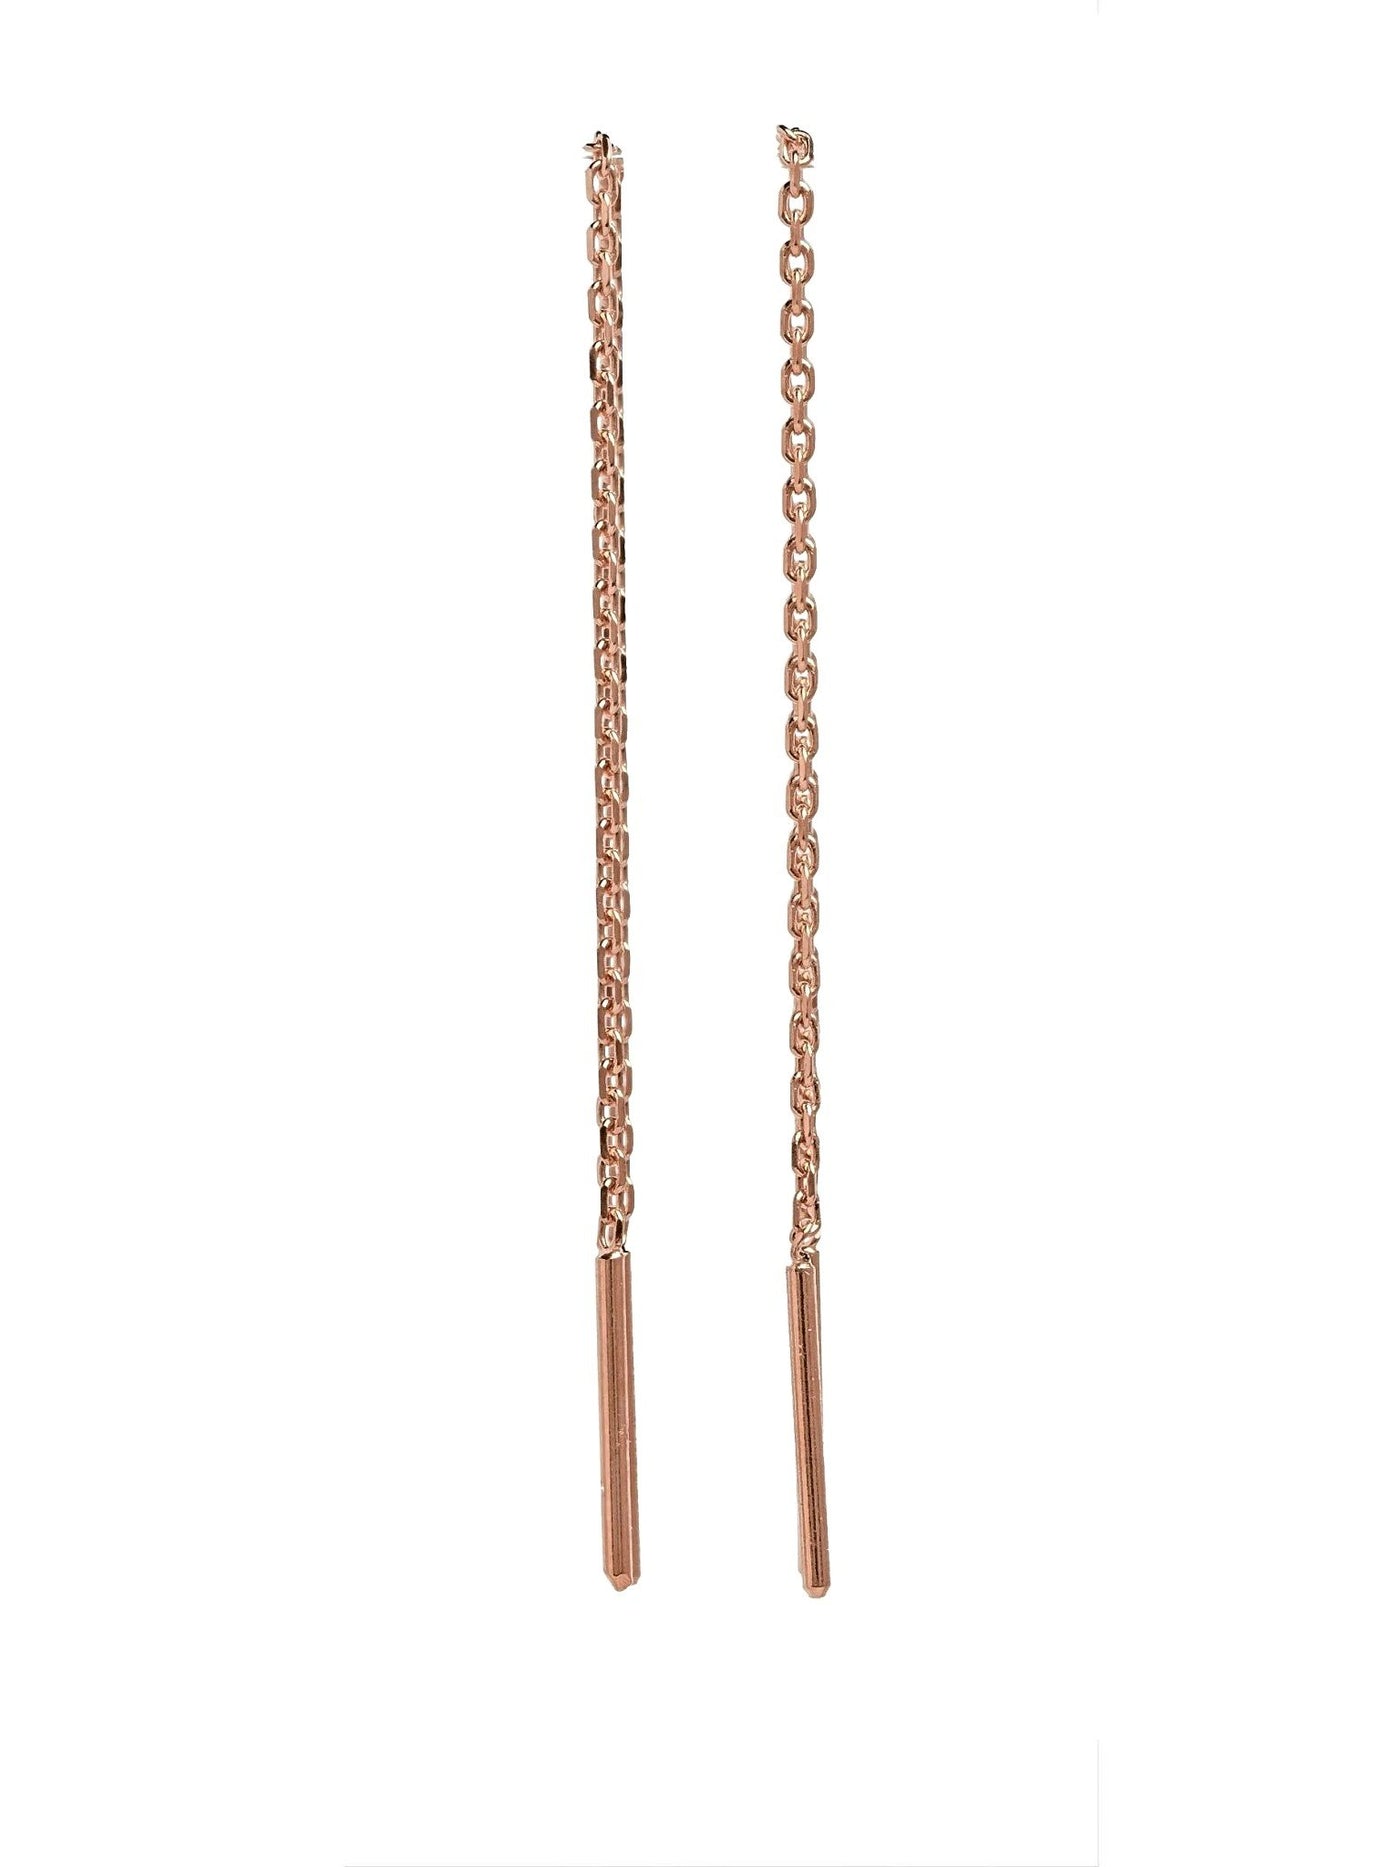 Marjin Threader Earrings - 18K Rose Gold PlatedAesthetic JewelryBackUpItemsLunai Jewelry